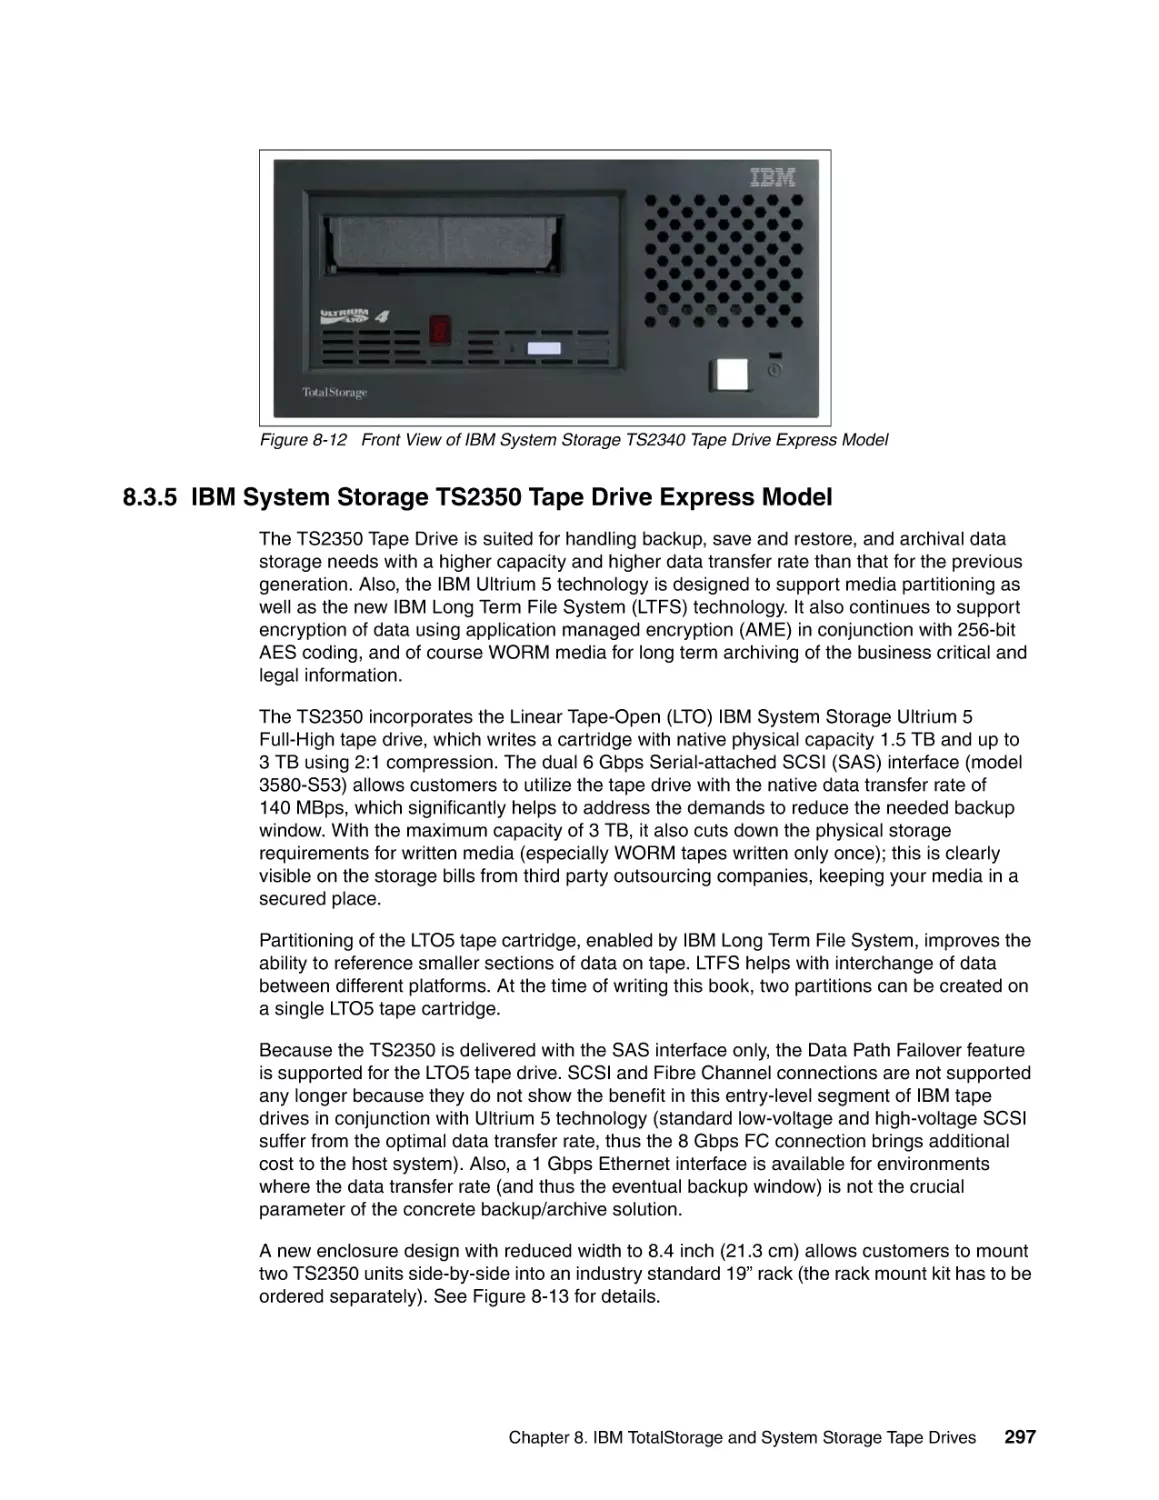 8.3.5 IBM System Storage TS2350 Tape Drive Express Model